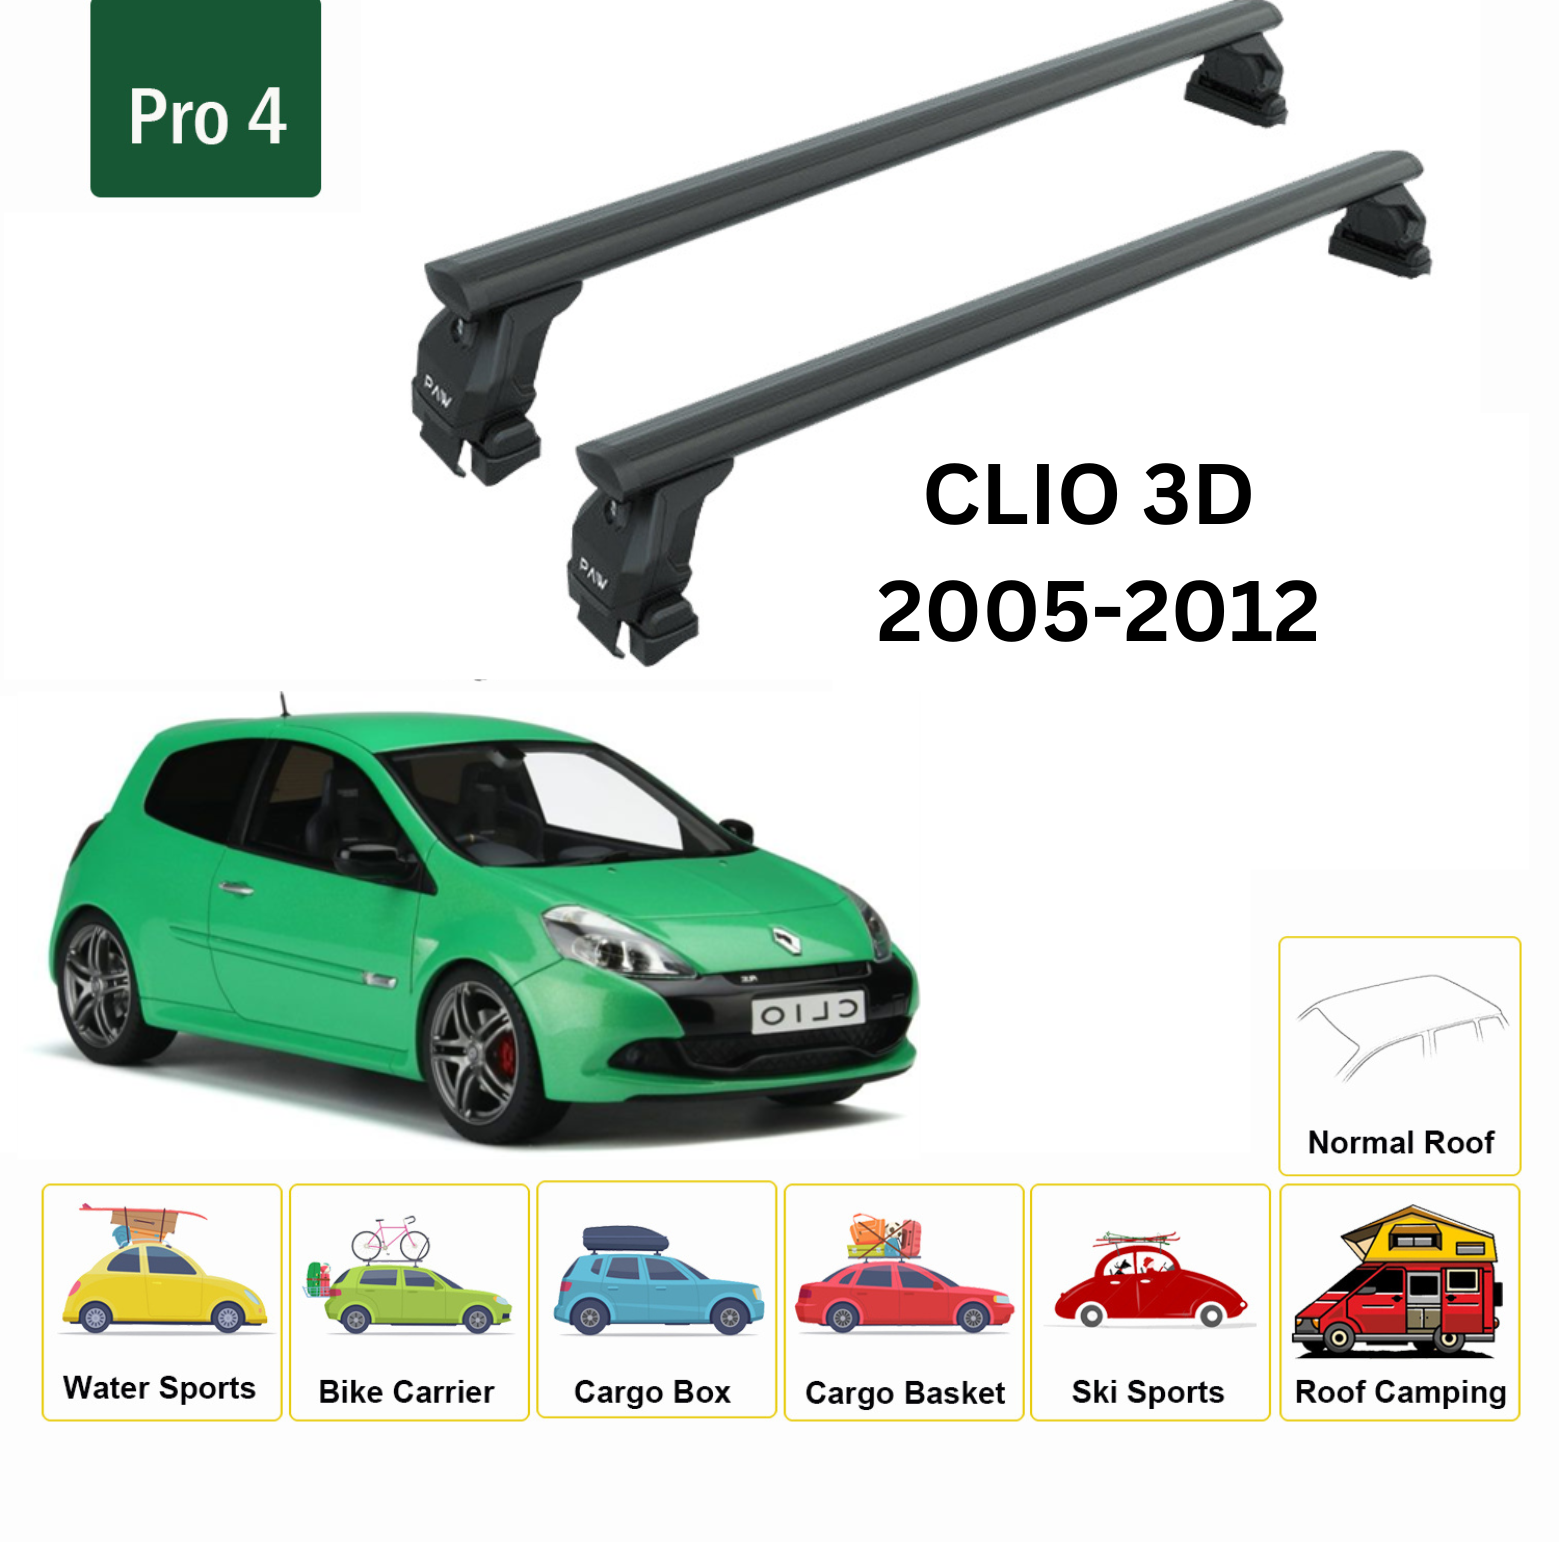 For Renault Clio 3D 2005-2012 Roof Rack System, Aluminium Cross Bar, Metal Bracket, Normal Roof, Black